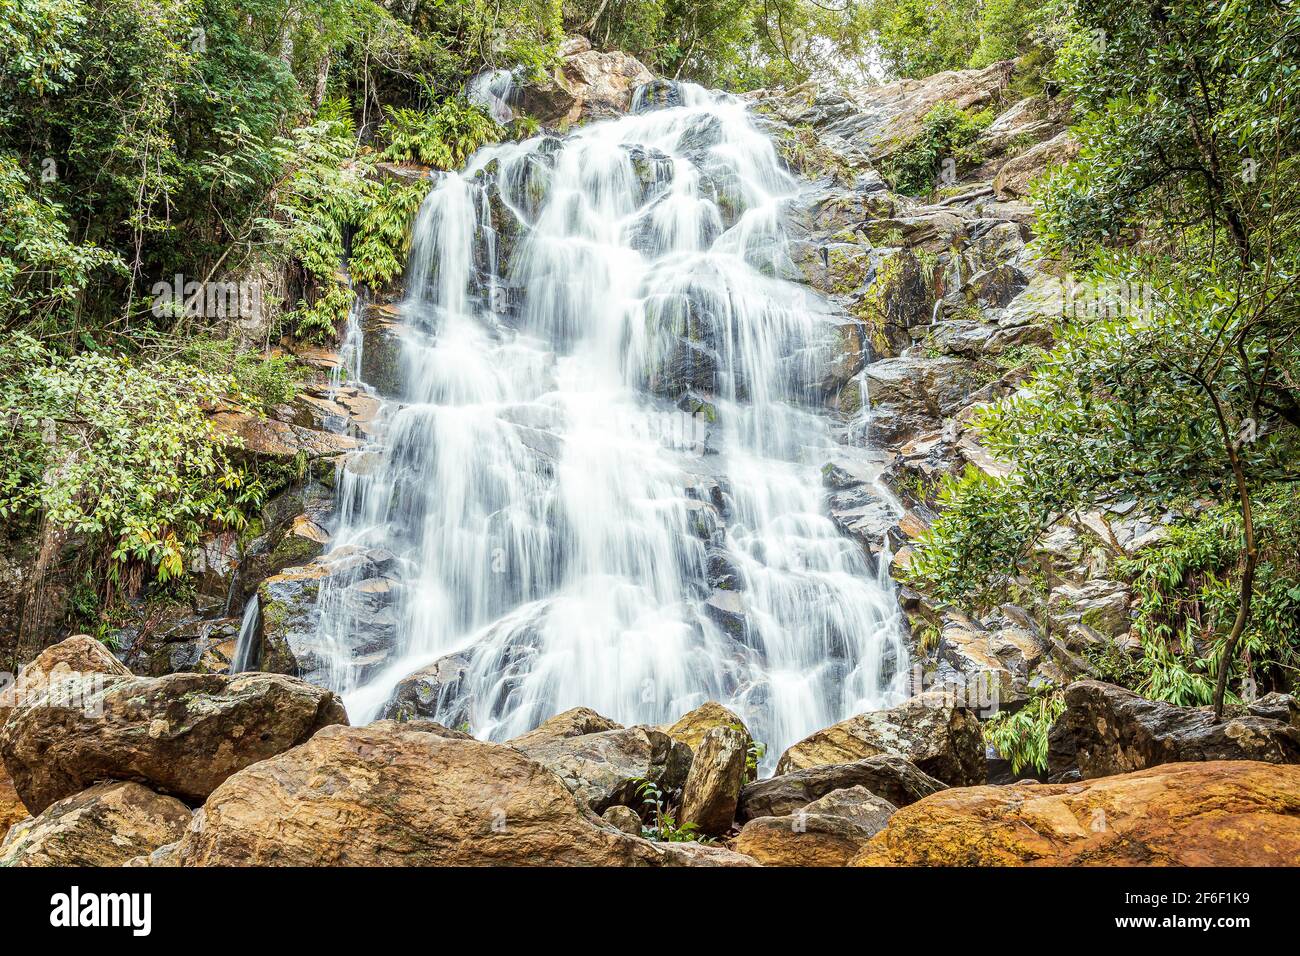 São Roque de Minas - MG, Brasile - 13 dicembre 2020: Cachoeira da Chinela. Cascata con l'acqua che scorre dalle rocce circondate da verde vegetatio Foto Stock